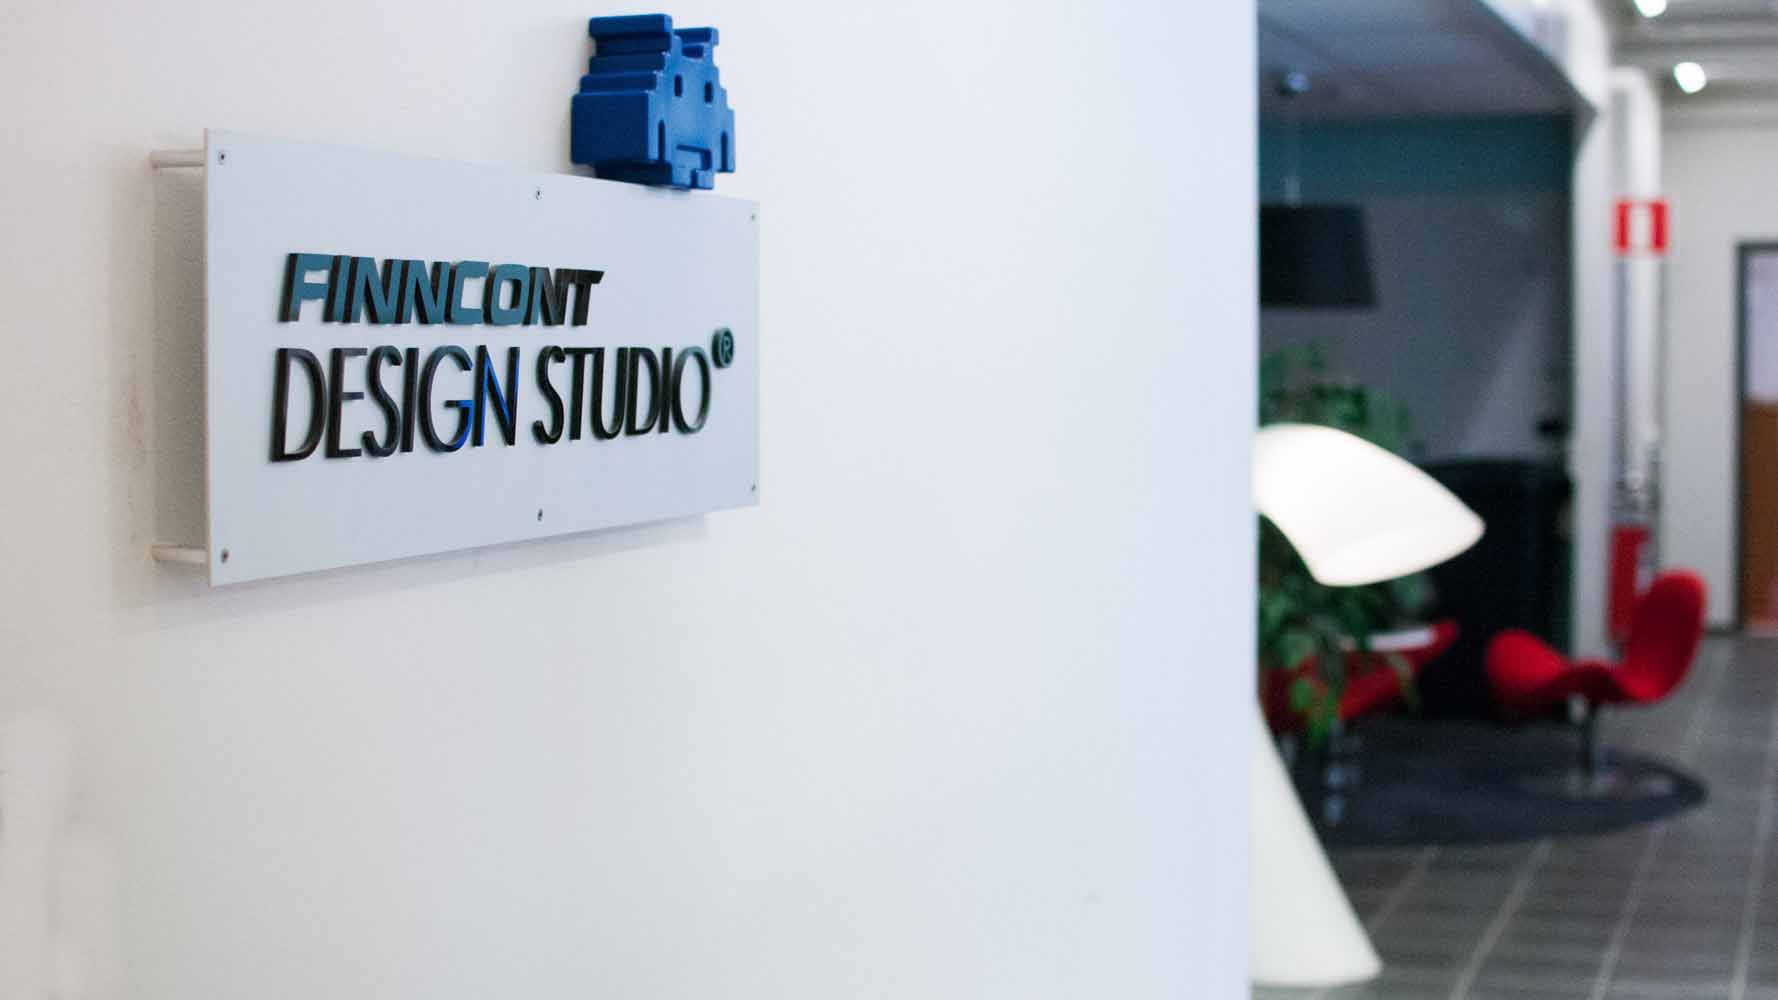 Finncont Design Studio